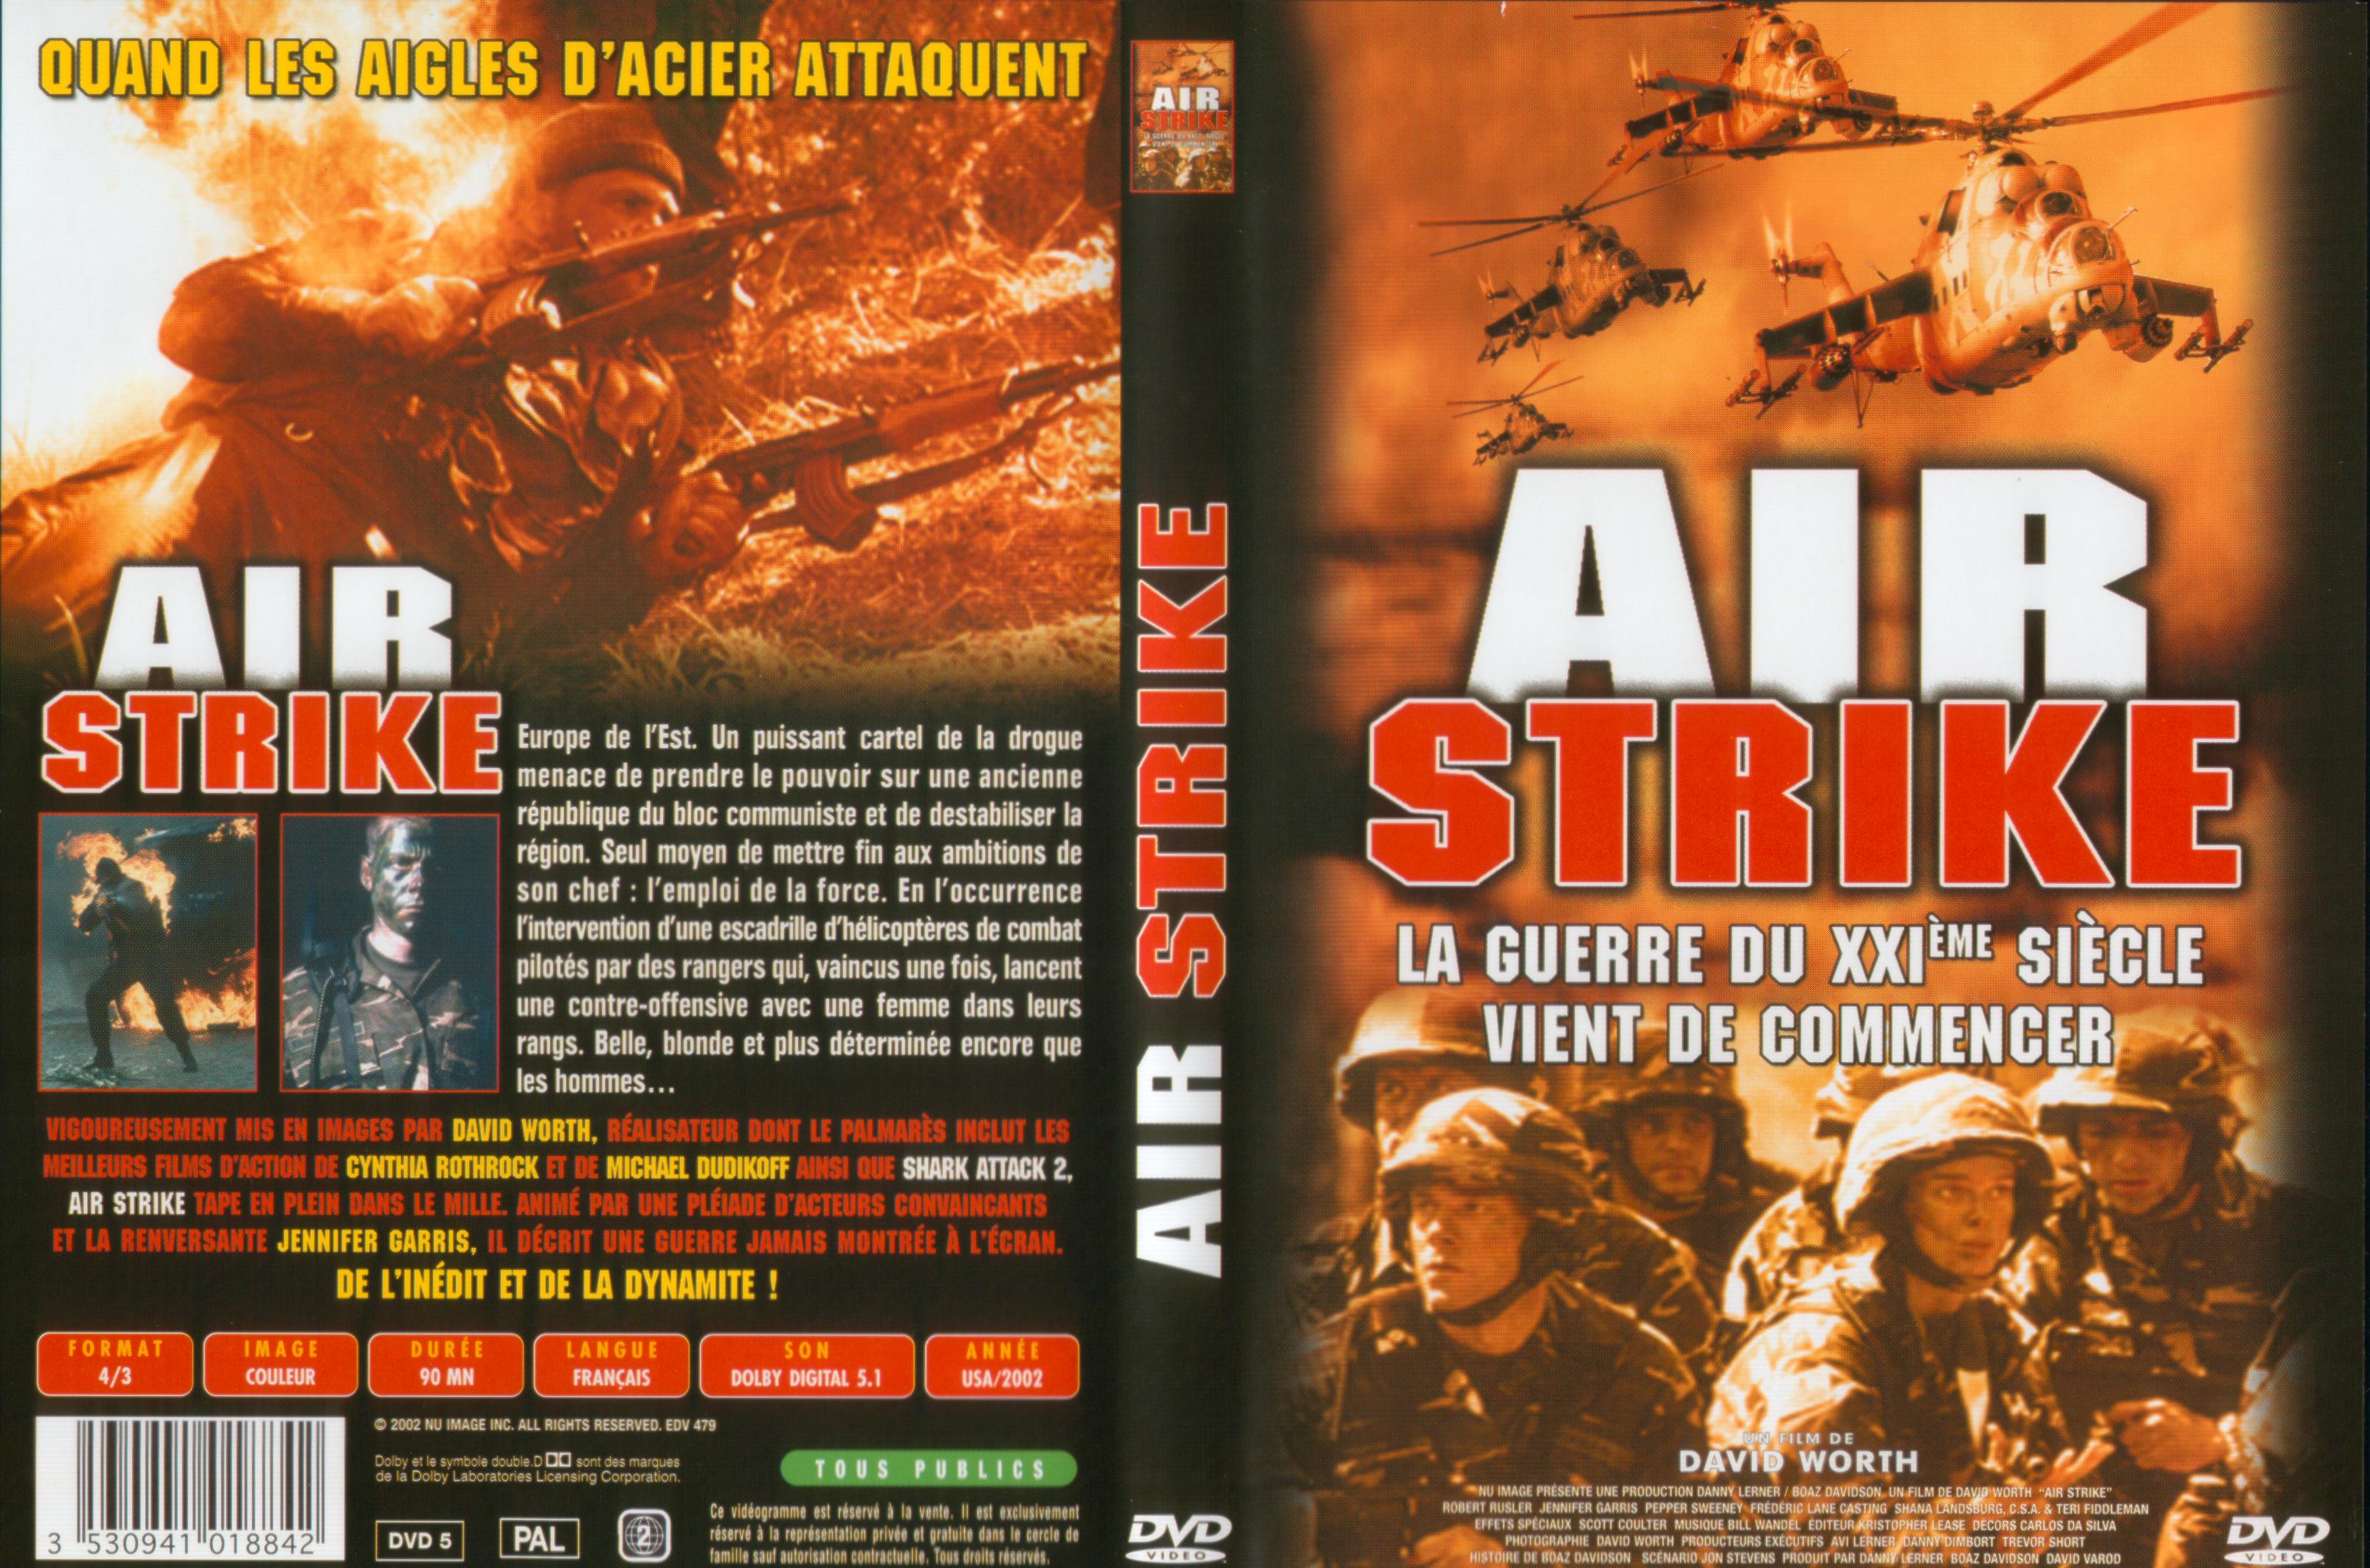 Jaquette DVD Air strike v2